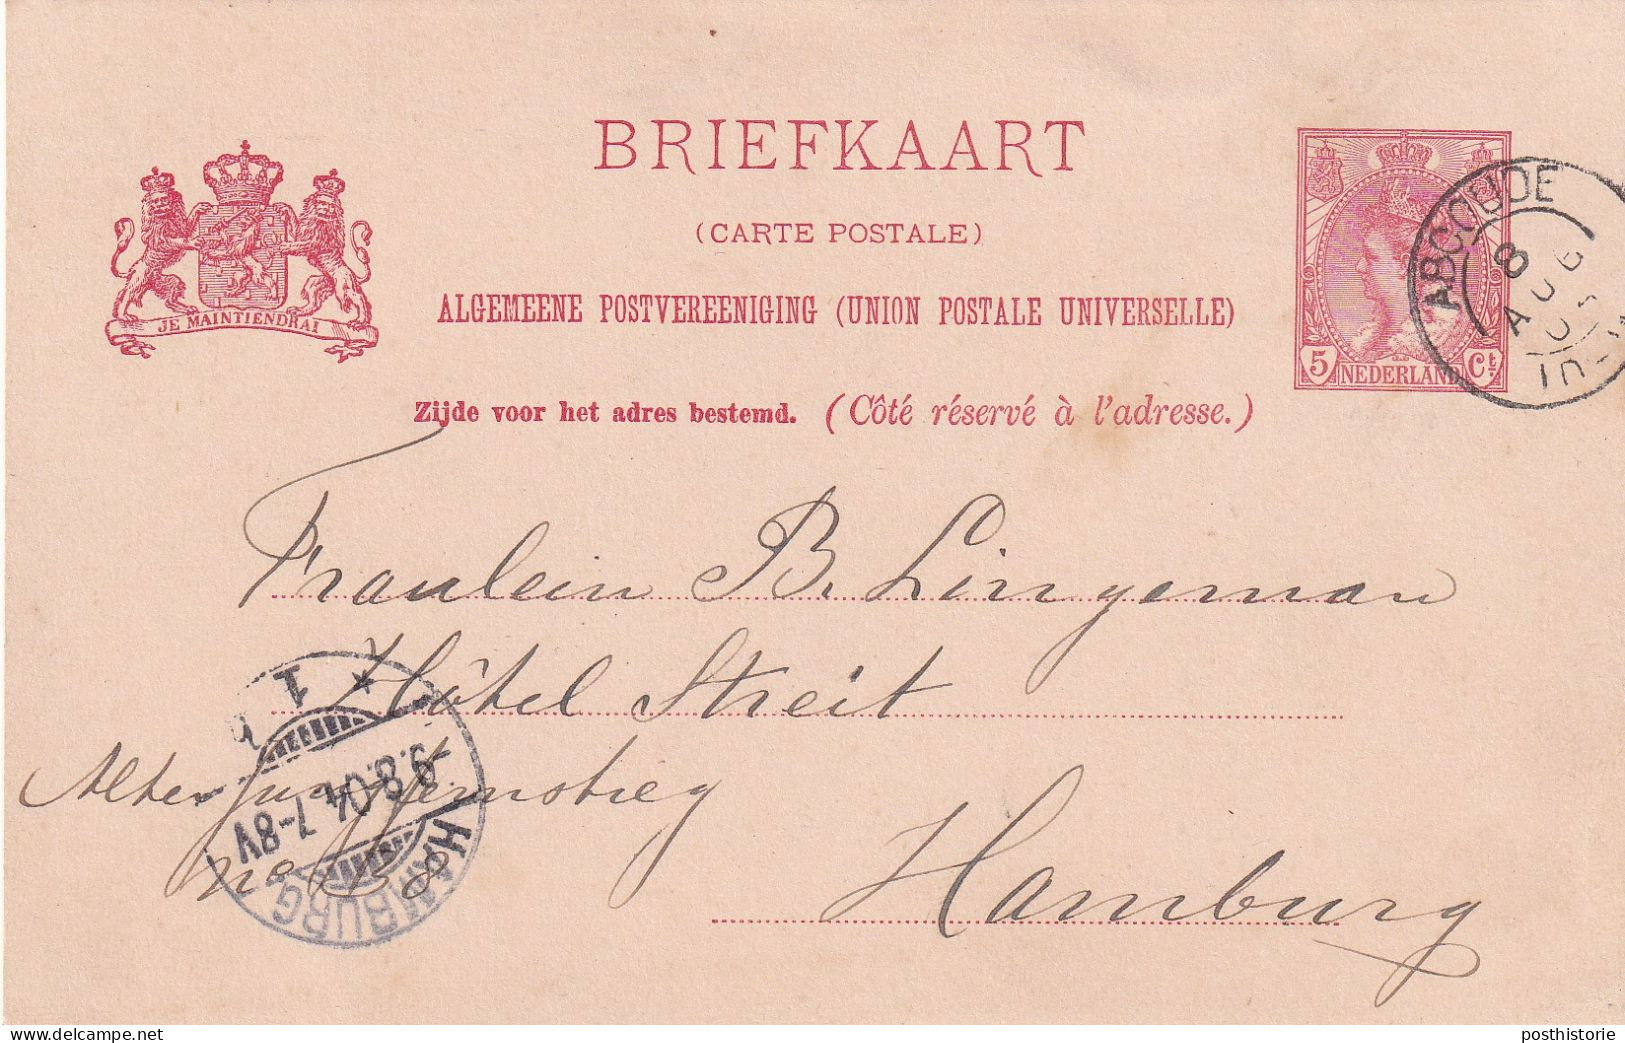 Briefkaart Geuzendam 61     8 Aug 1904 Abcoude (postkantoor Kleinrond) Naar Hamburg - Postal History